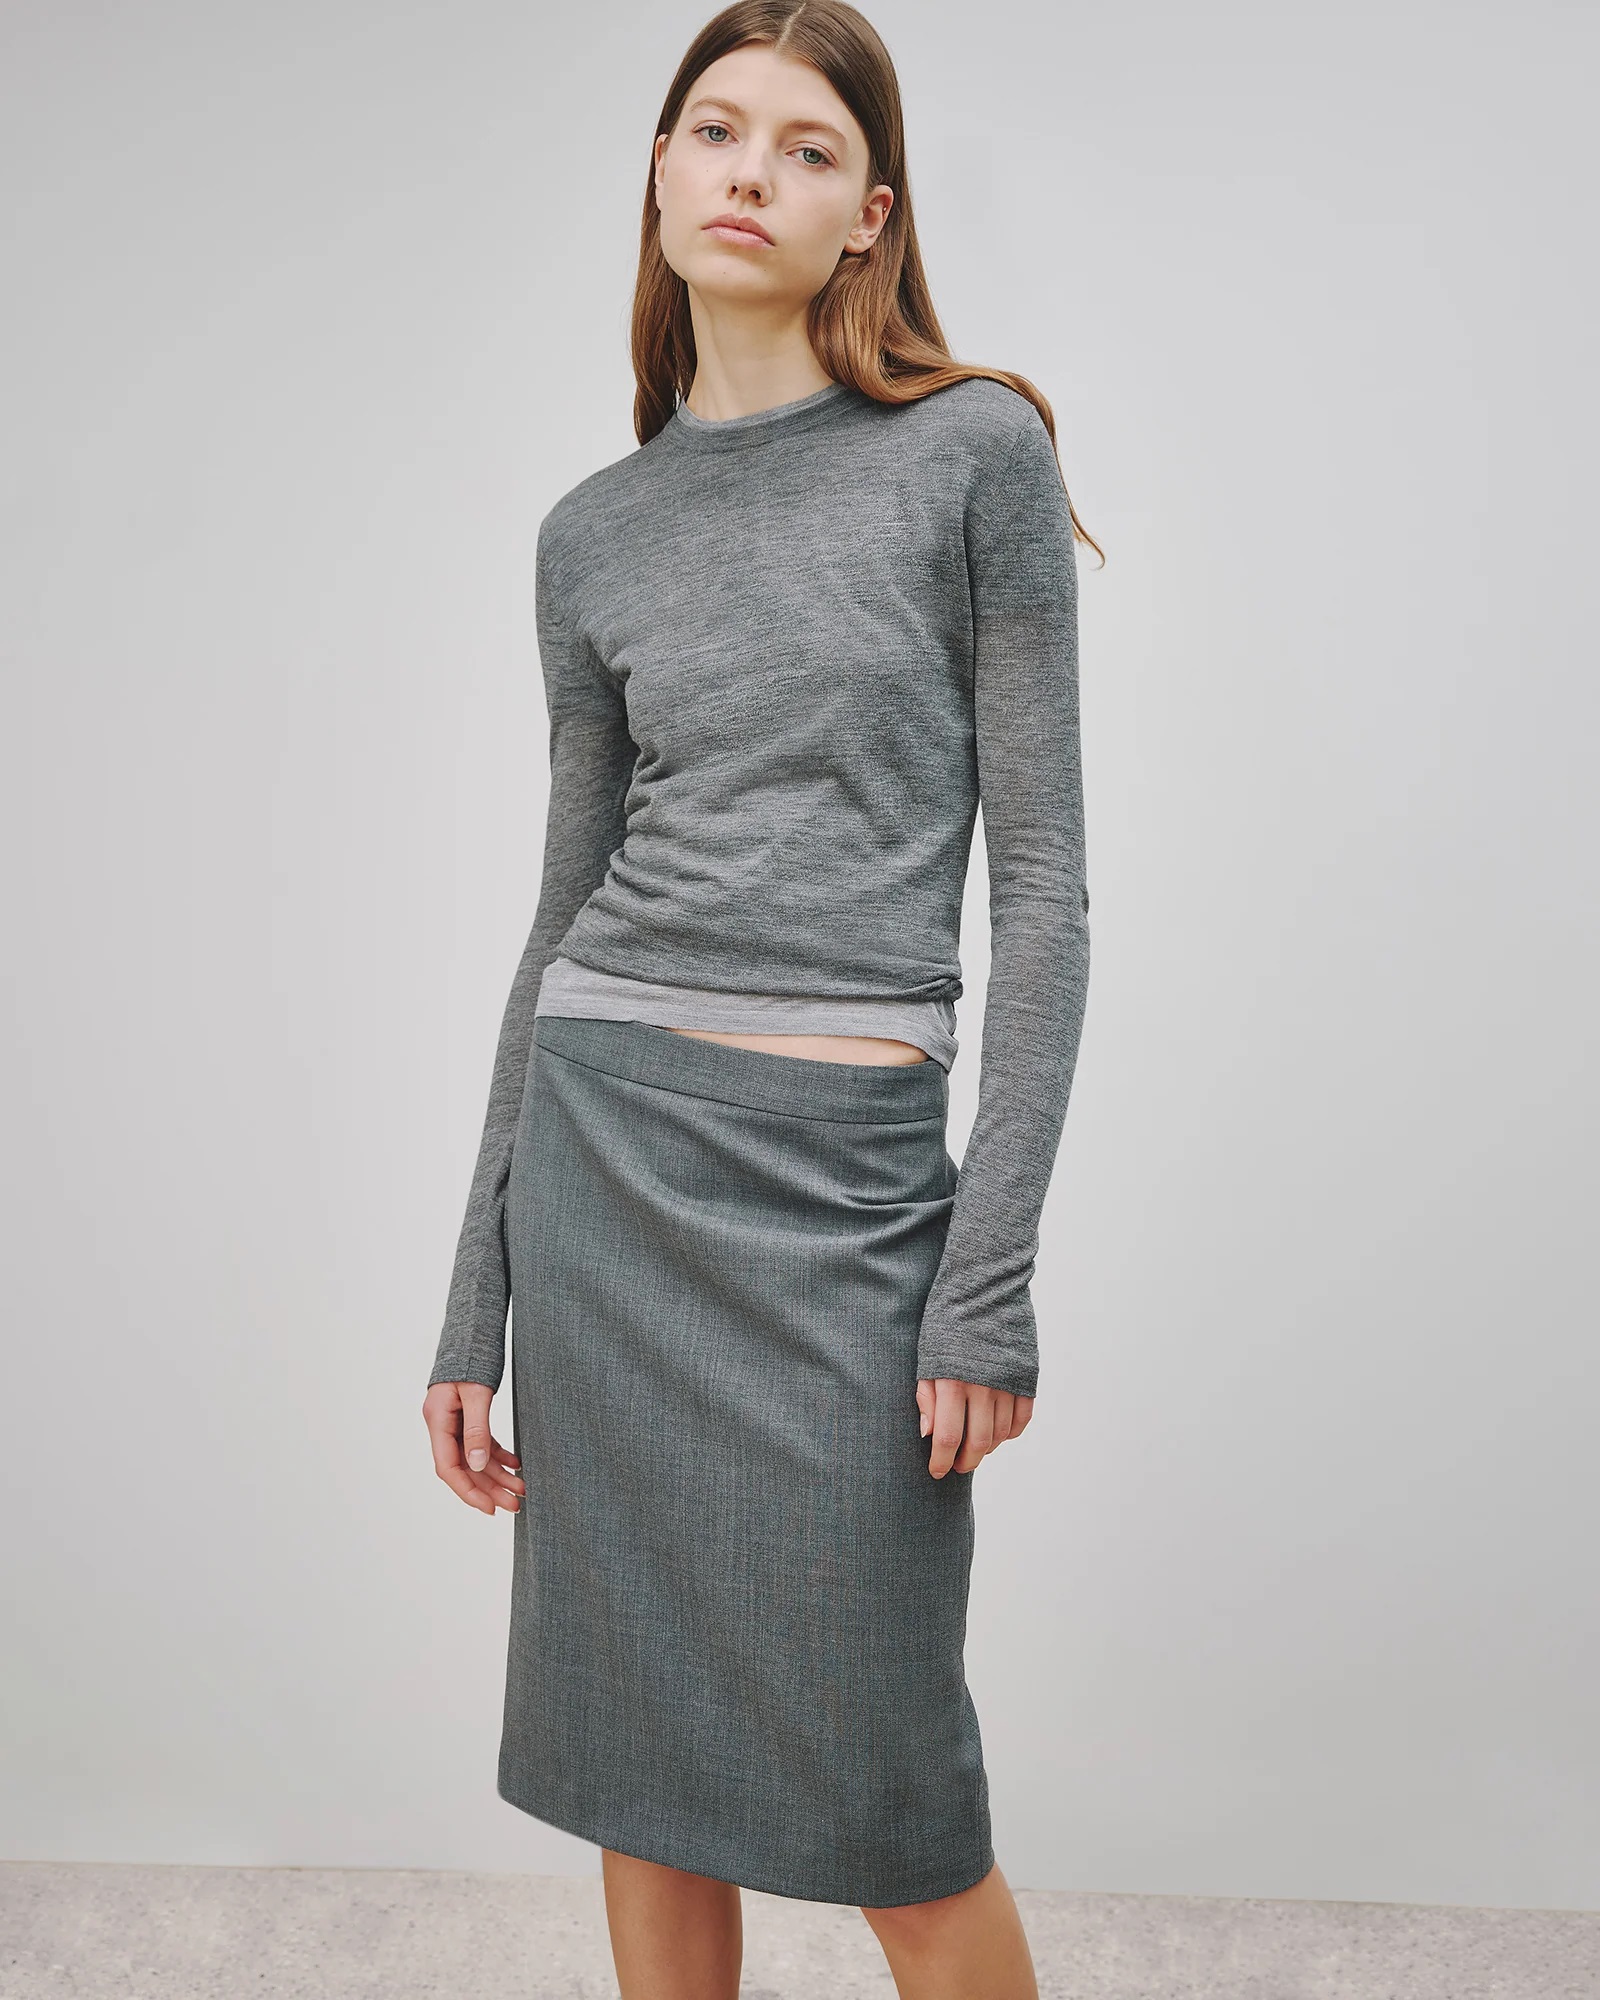 NILI LOTAN Silk Knit Sweater Candice in Dark Grey Melange